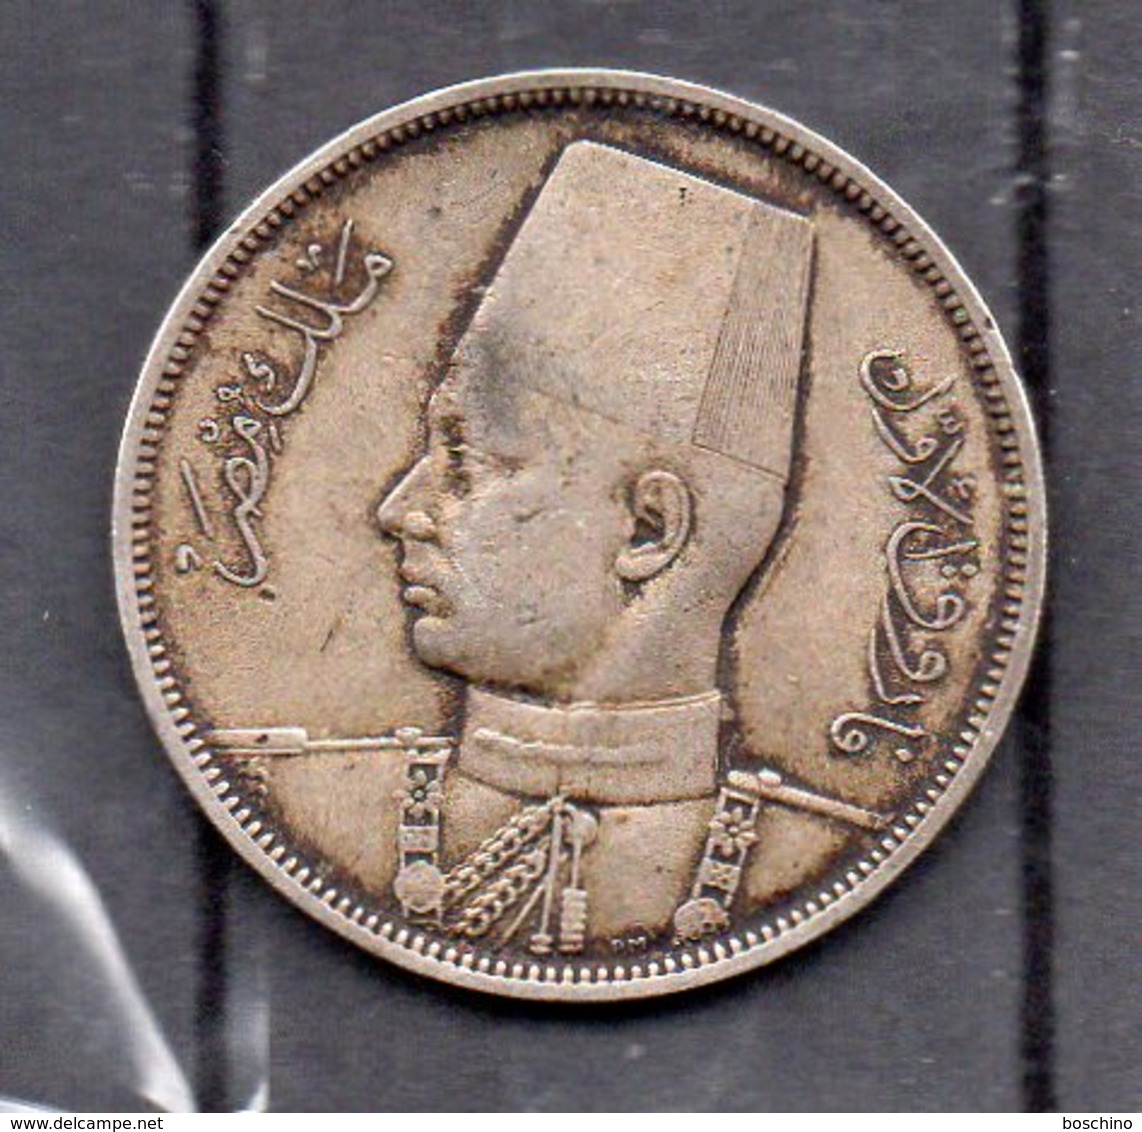 Egypte / Egypt - 5 Piastres Année 1939 ( Silver/argent) - Egypte